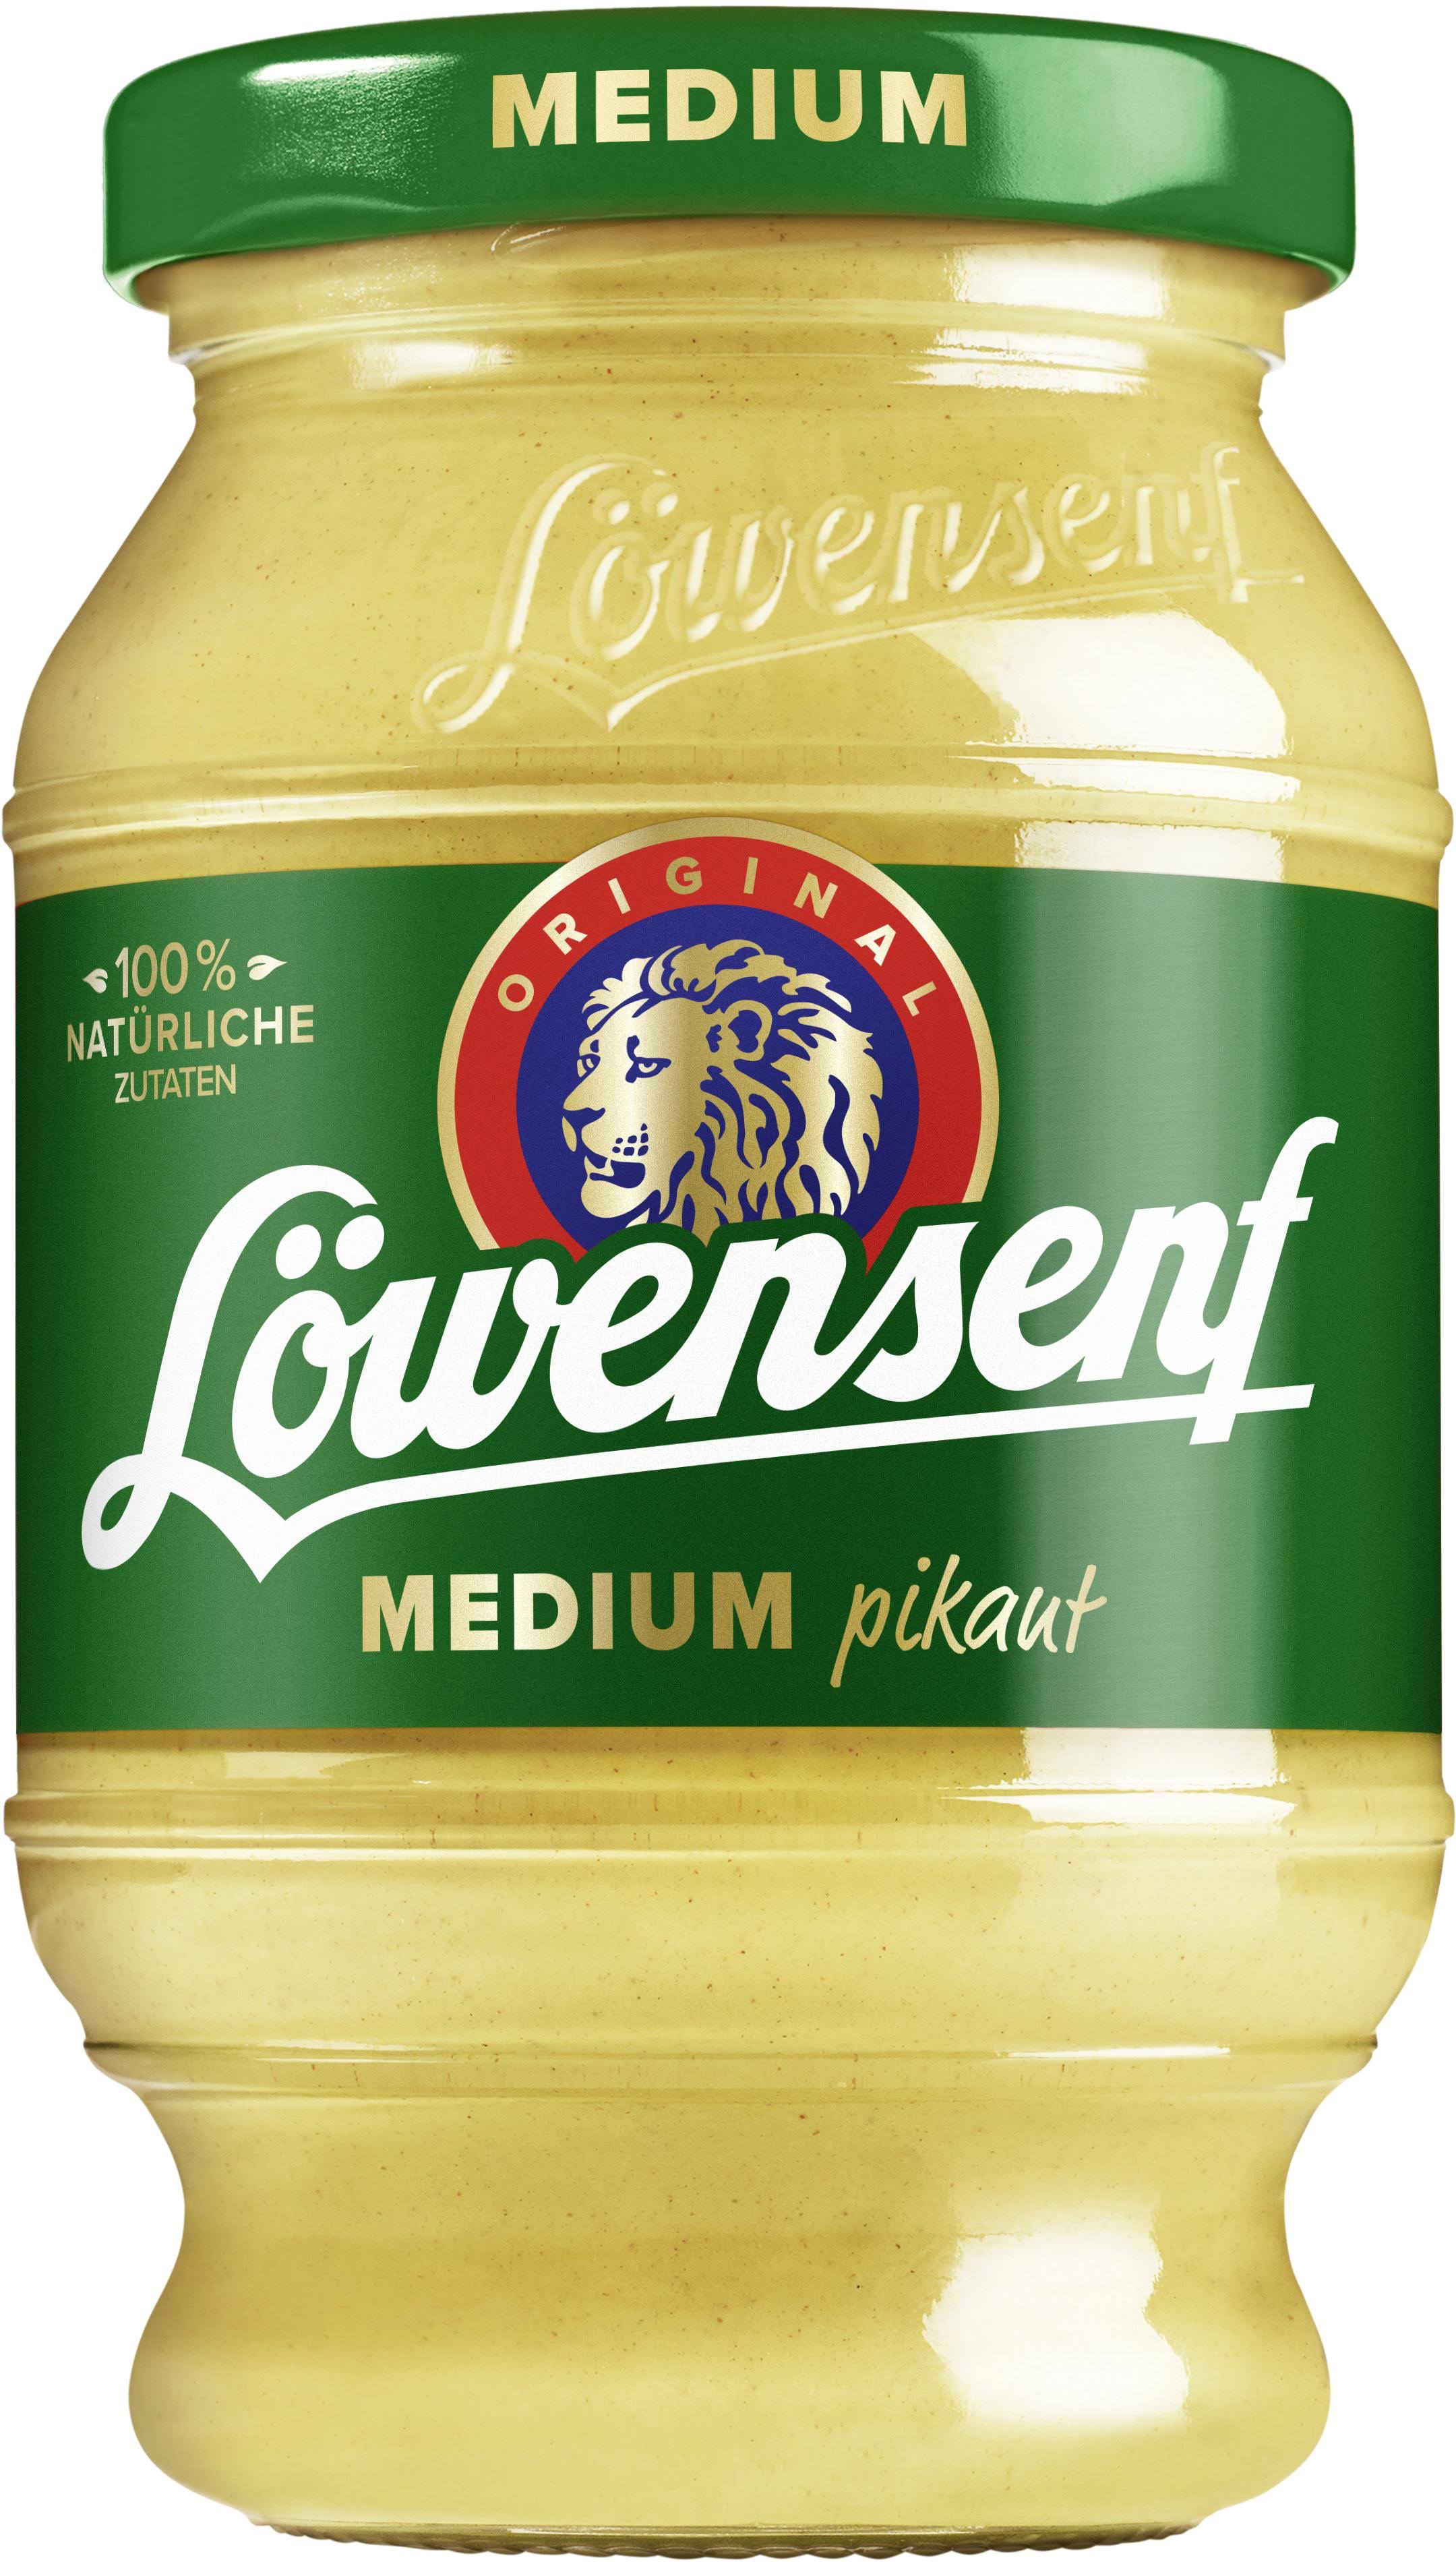 Lowensenf Mustard - Medium, 100ml